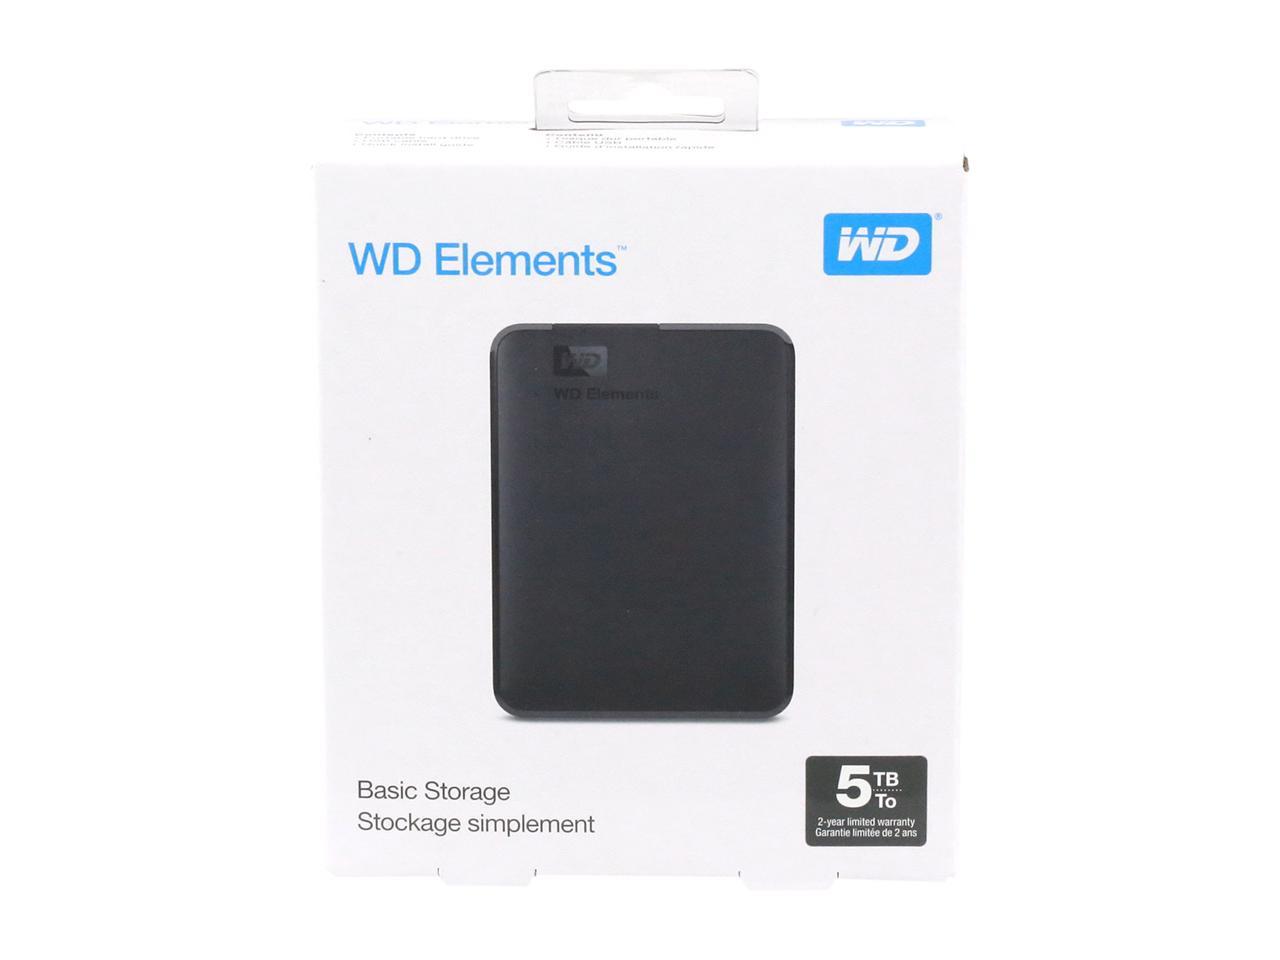 WDBU6Y0050BBK-WESN USB 3.0 WD 5TB Elements Portable External Hard Drive 